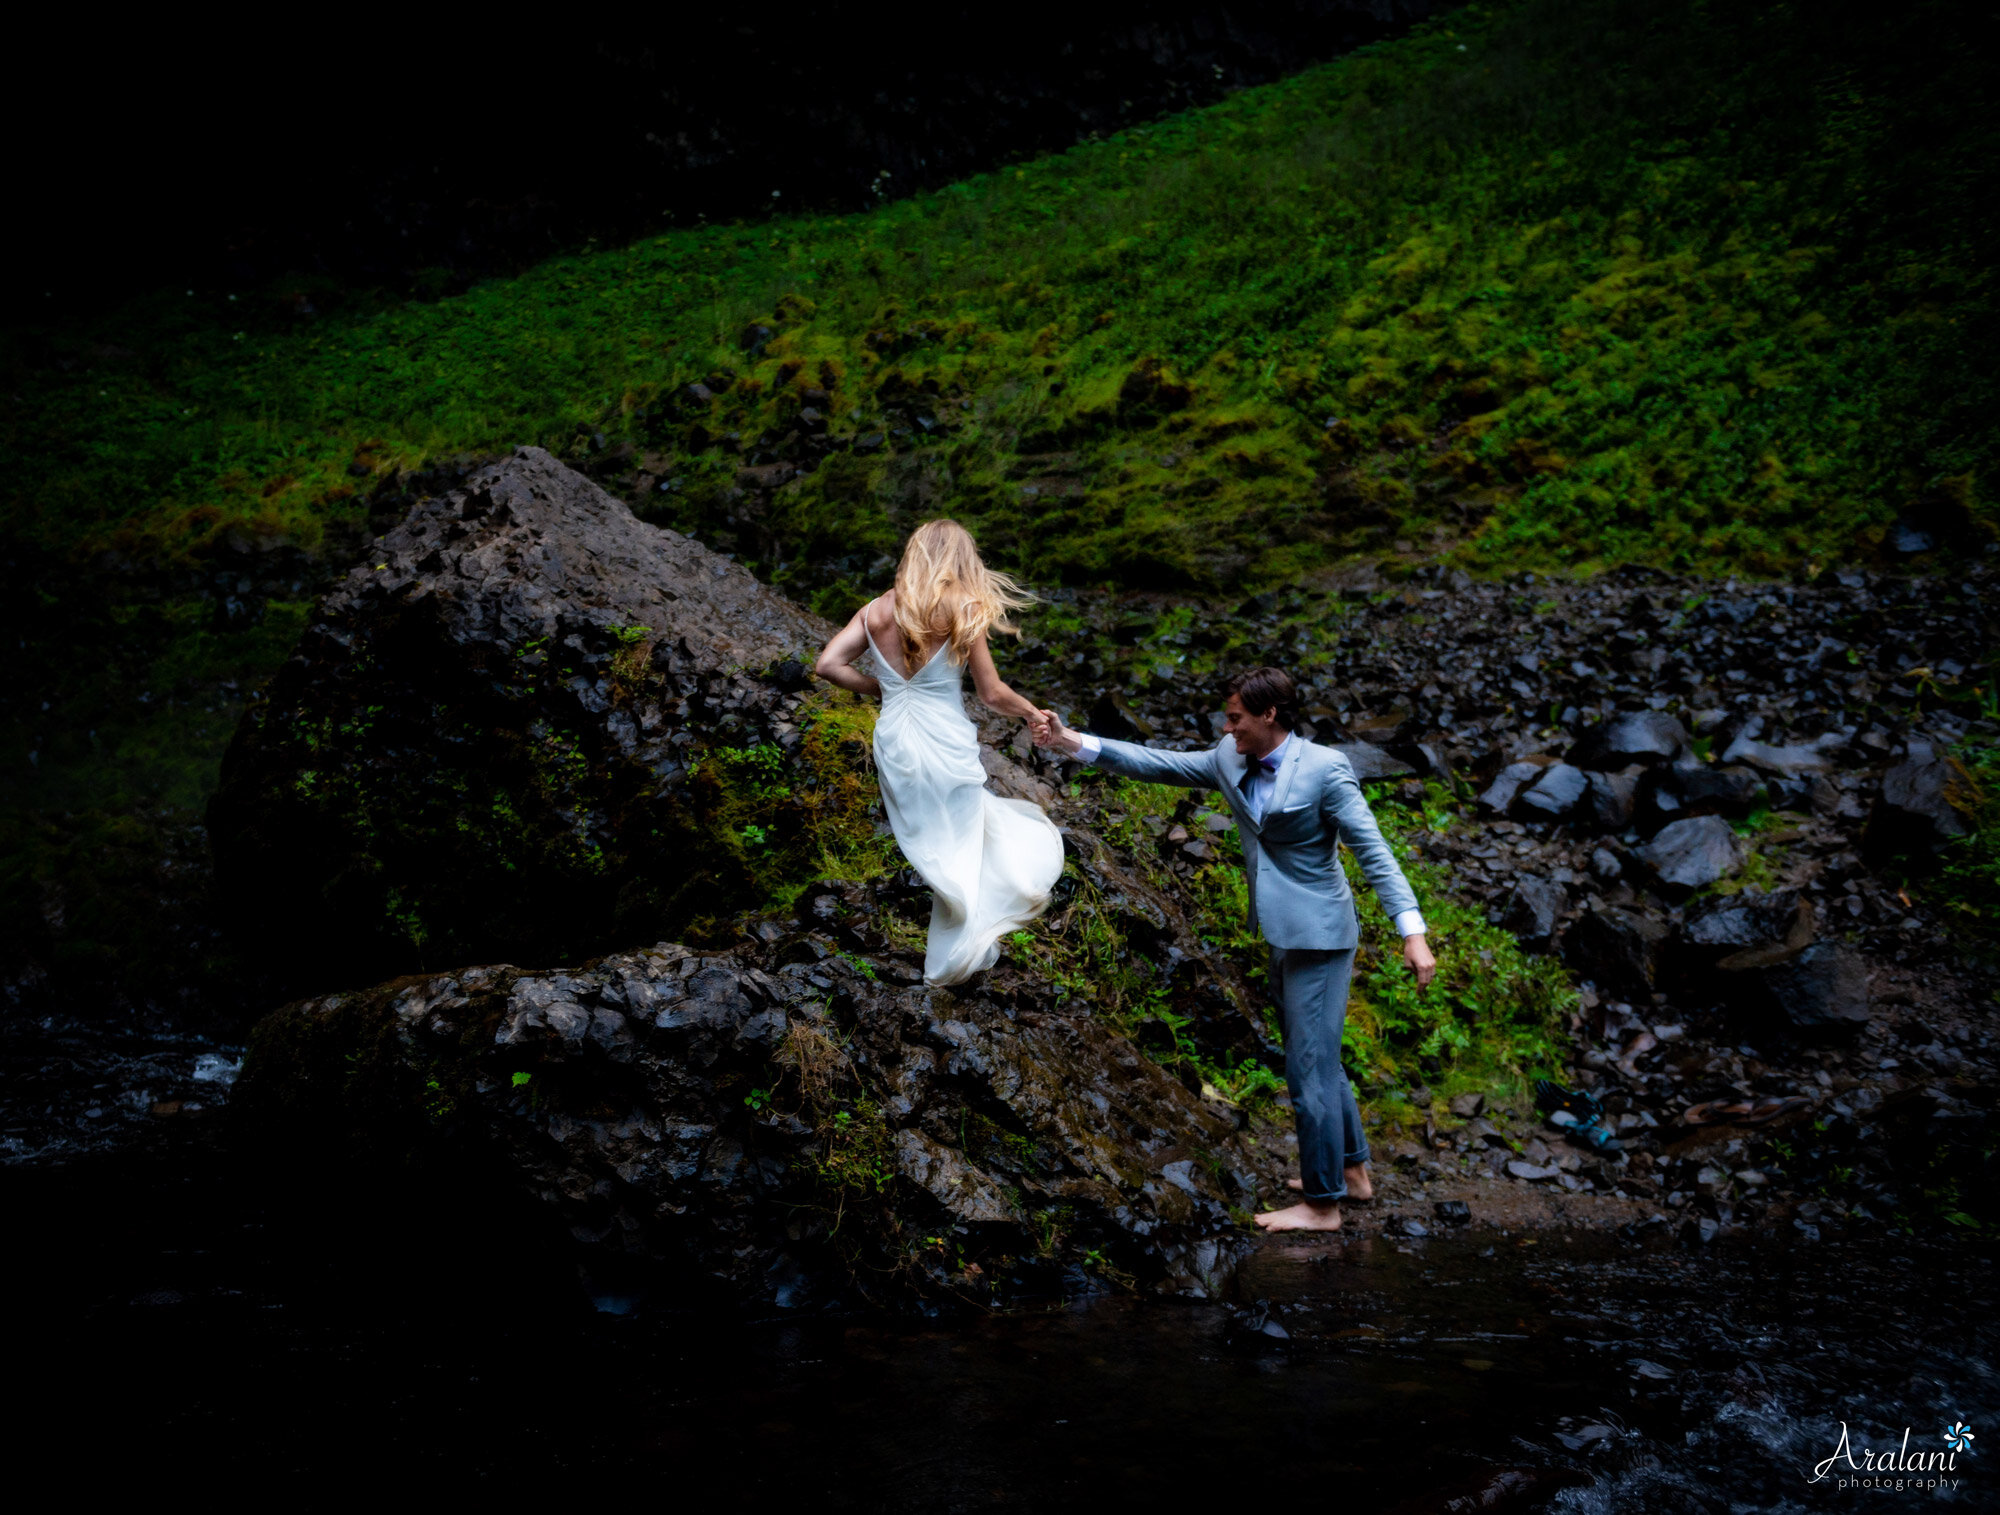 Courtney-Jimmy-040-Columbia-River-Gorge-Government-Cove-Latourell-Falls-Oregon-Wedding-Elopement-Photographer-Aralani-Photography-Courtney_Jimmy_W0255.jpg